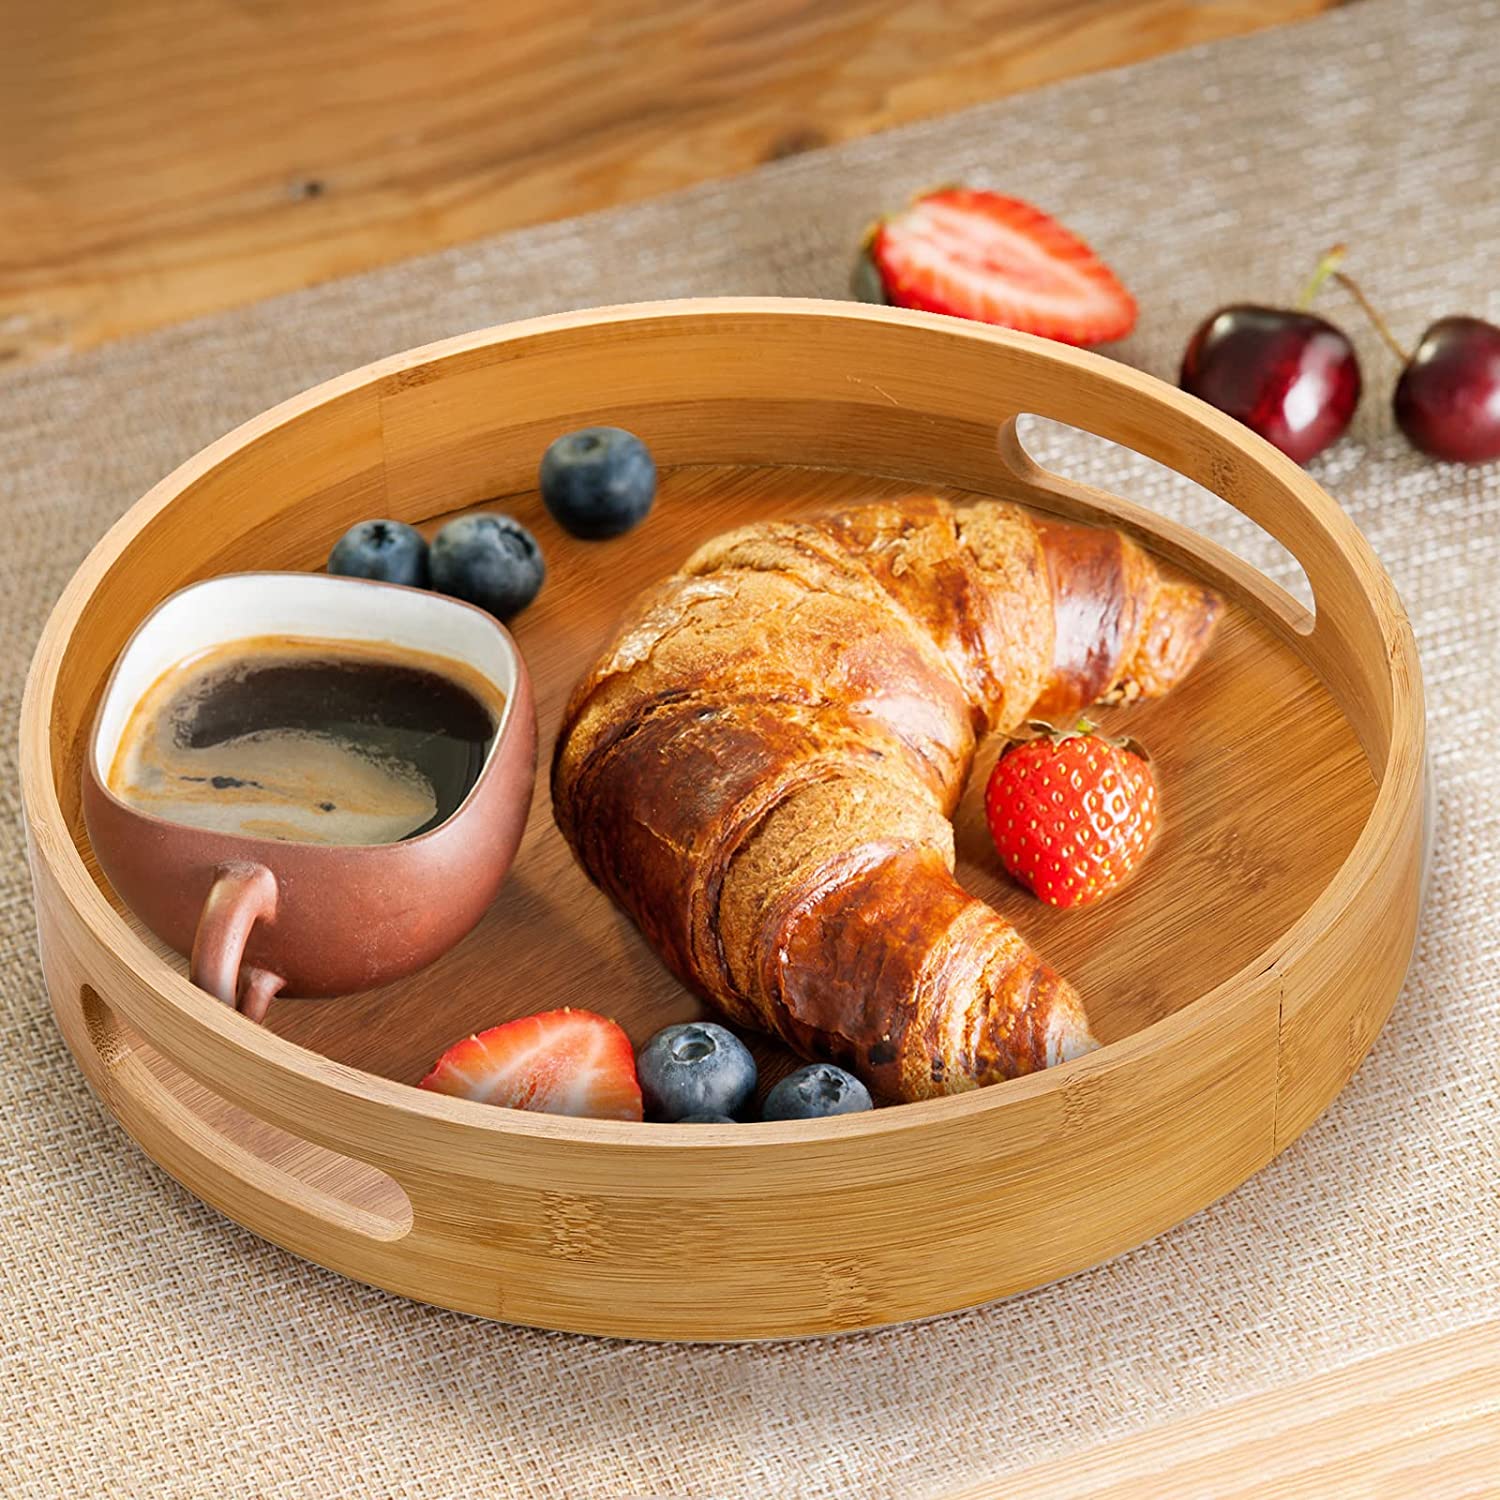 Bandeja para servir bambú con manijas redondas bandeja de bambú poco profunda, bandejas rústicas decorativas de madera de bambú natural para mesa de café